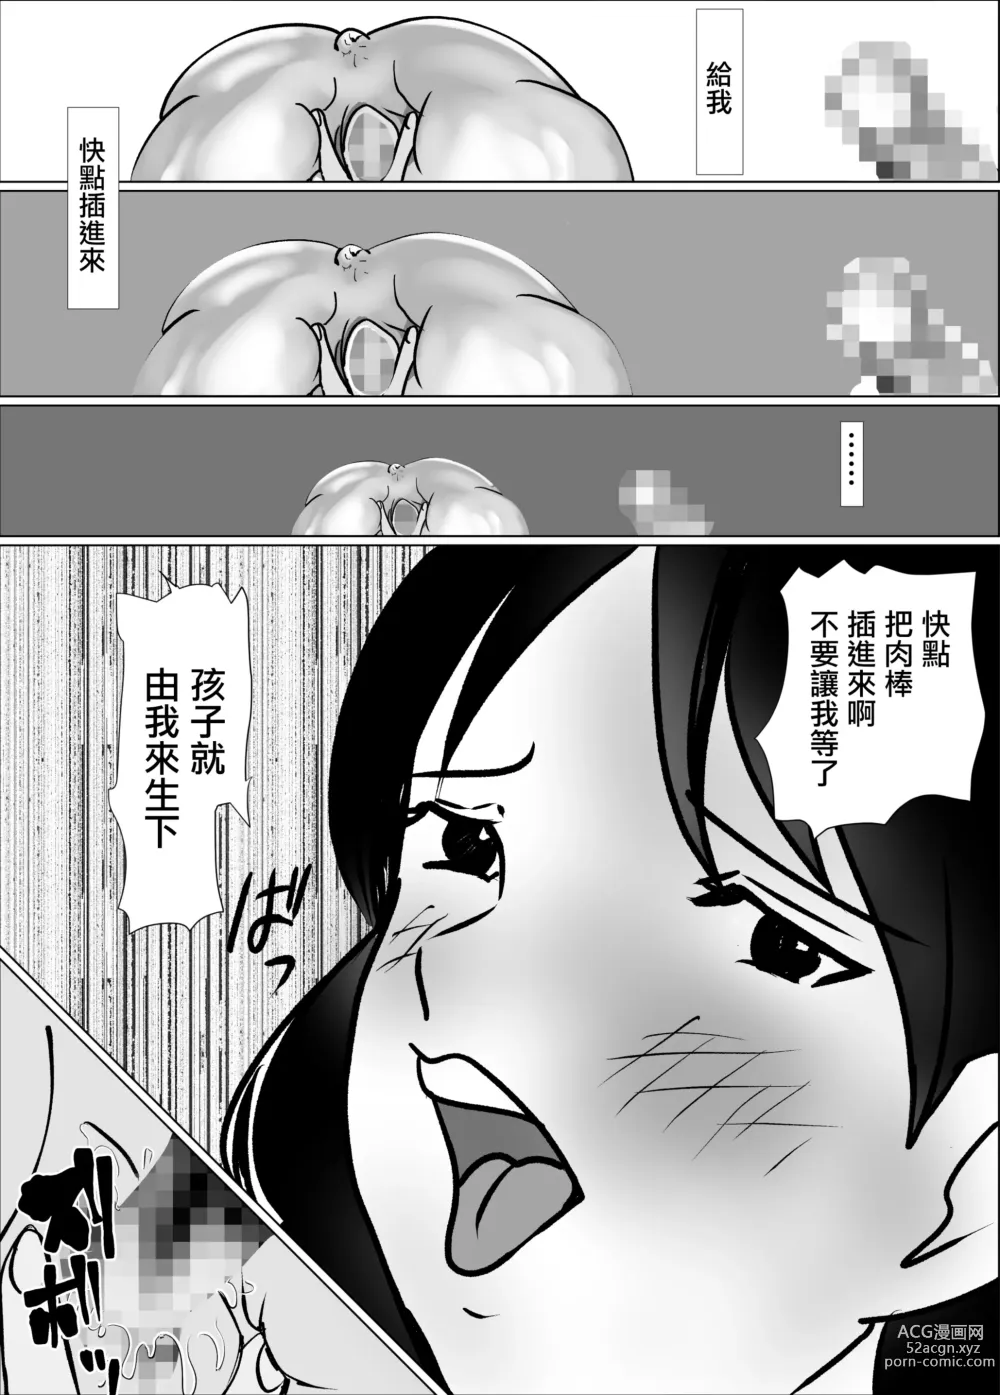 Page 34 of doujinshi 為了在妻子的排卵日授精而攢的精子被丈母娘看上了